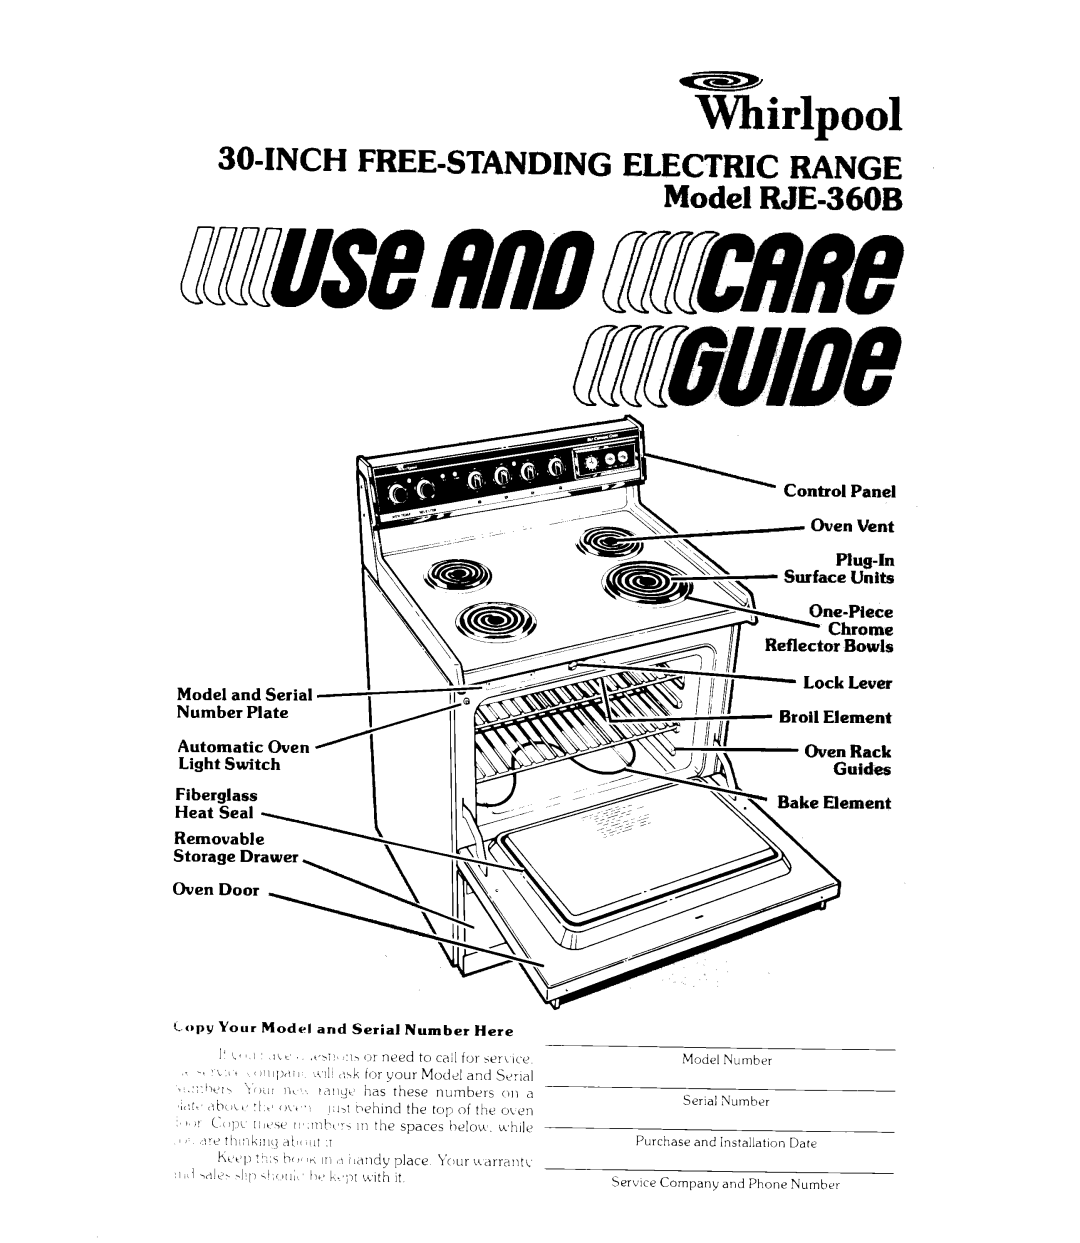 Whirlpool manual TF&3001, INCHFREE-STANDINGUECTRICRANGEModelRIE360B 